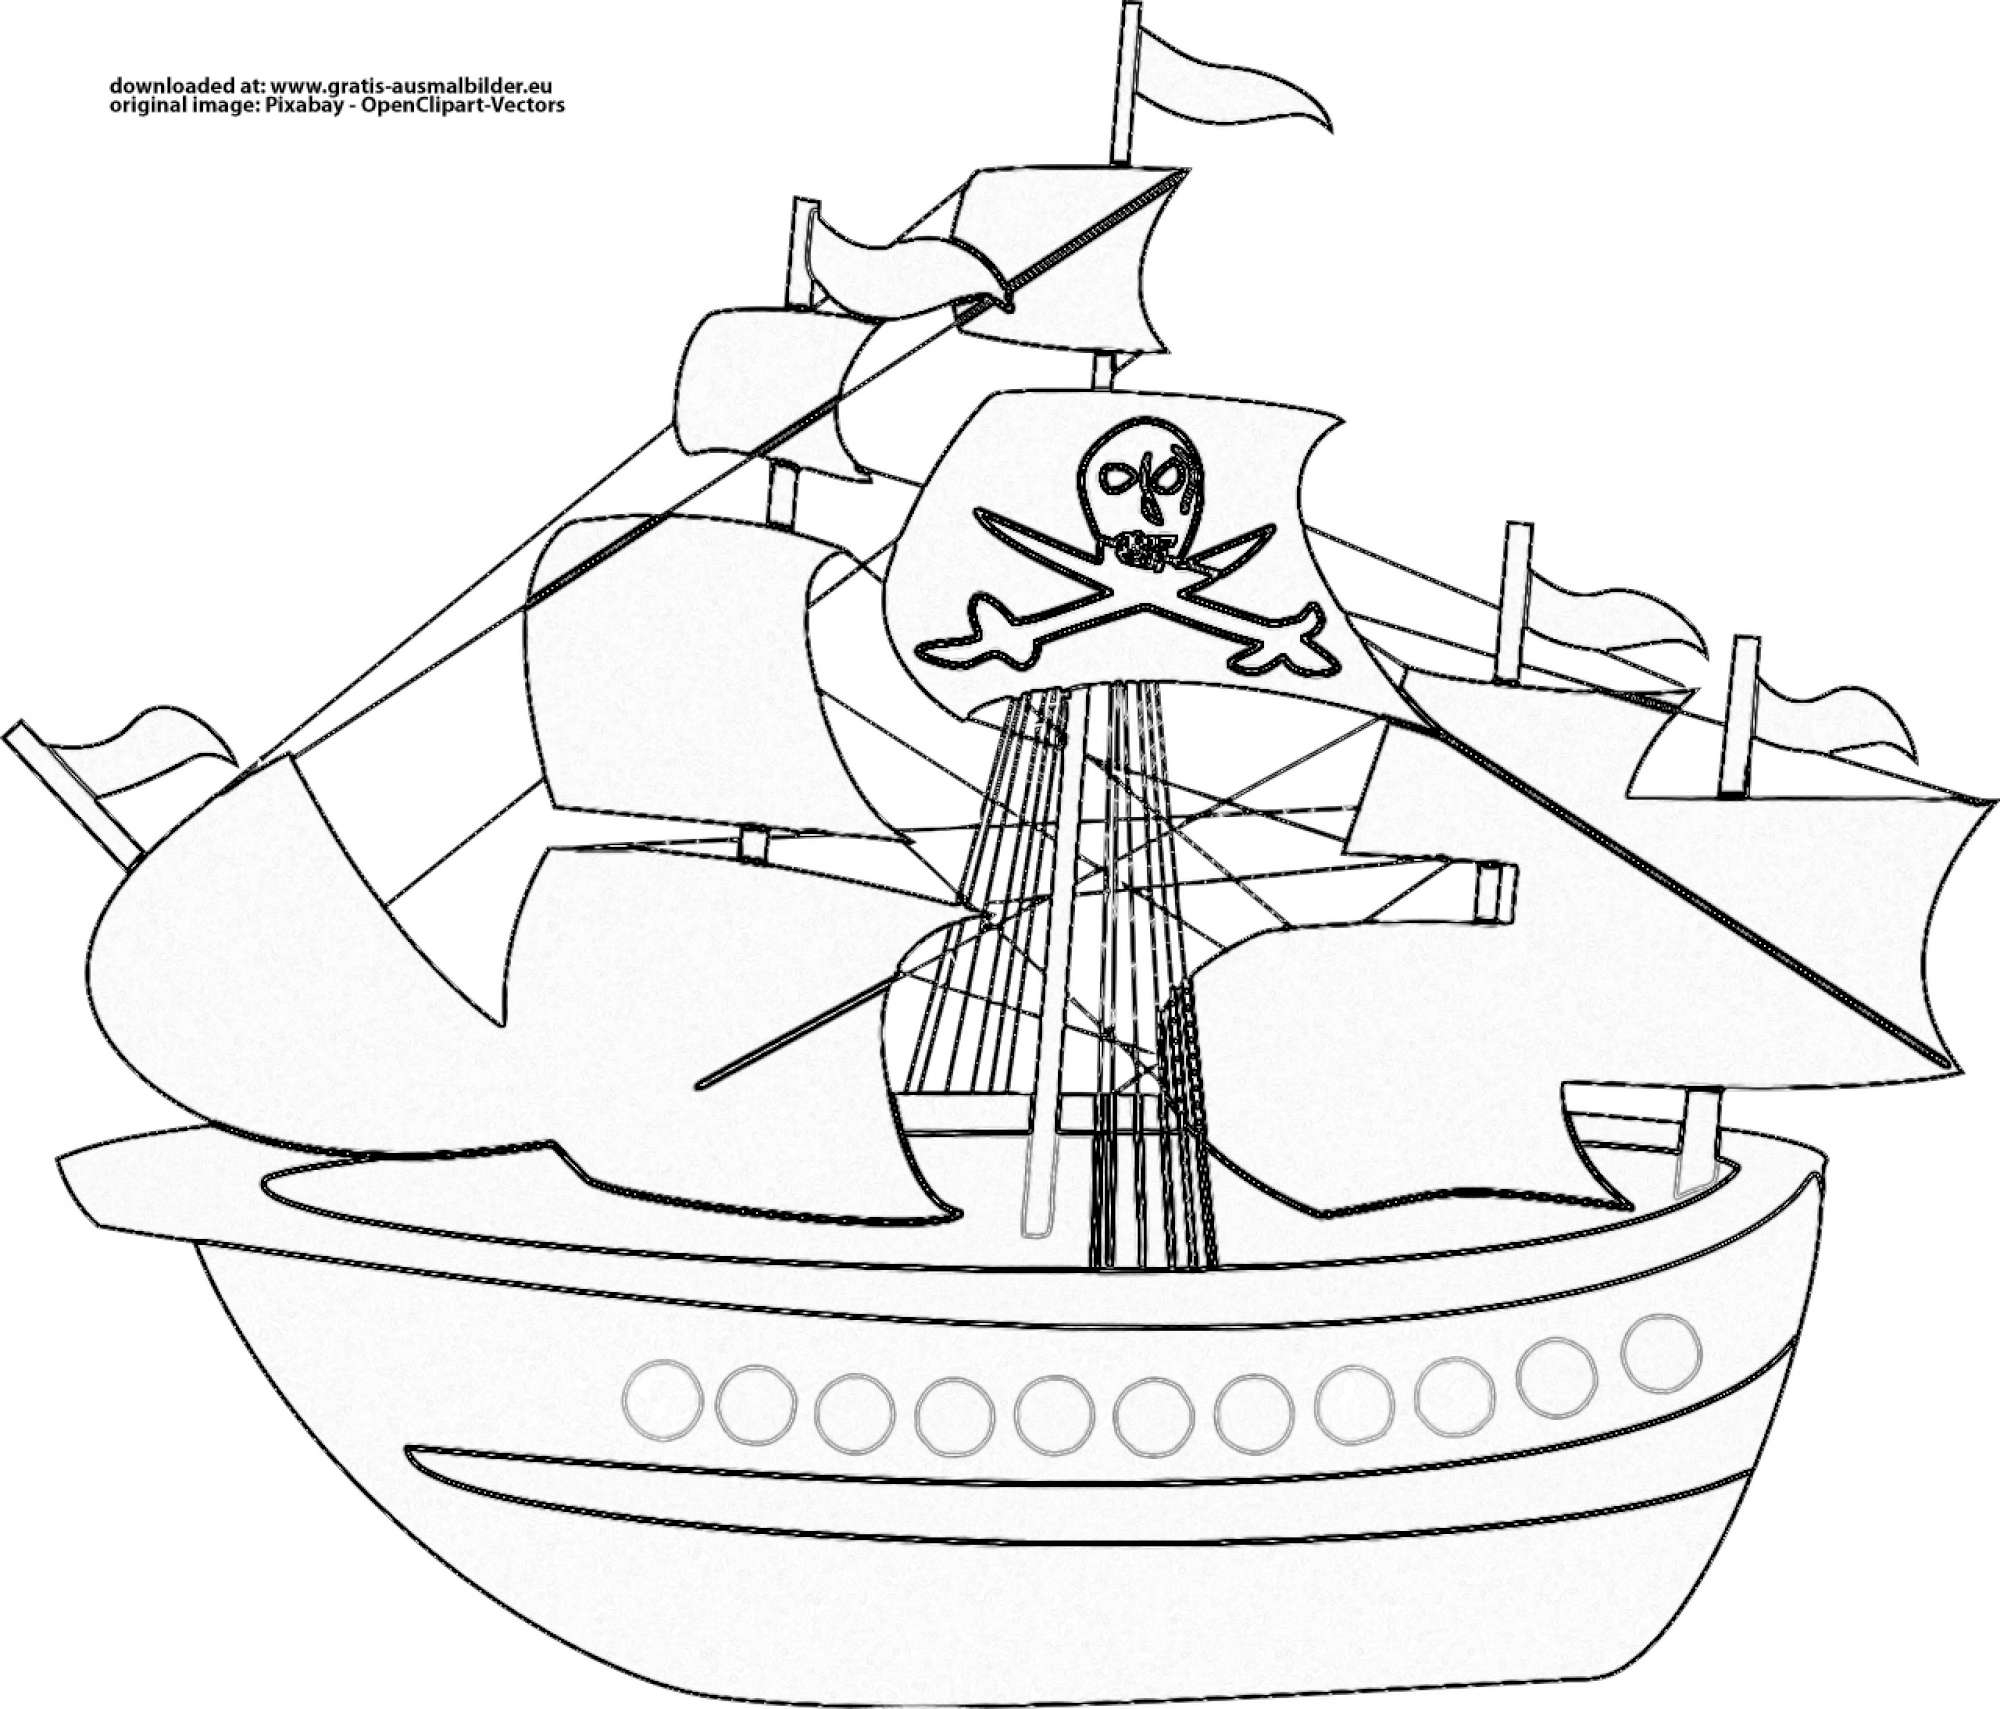 ▷ Piratenschiff - Gratis Ausmalbild bei Piratenschiff Ausmalbild